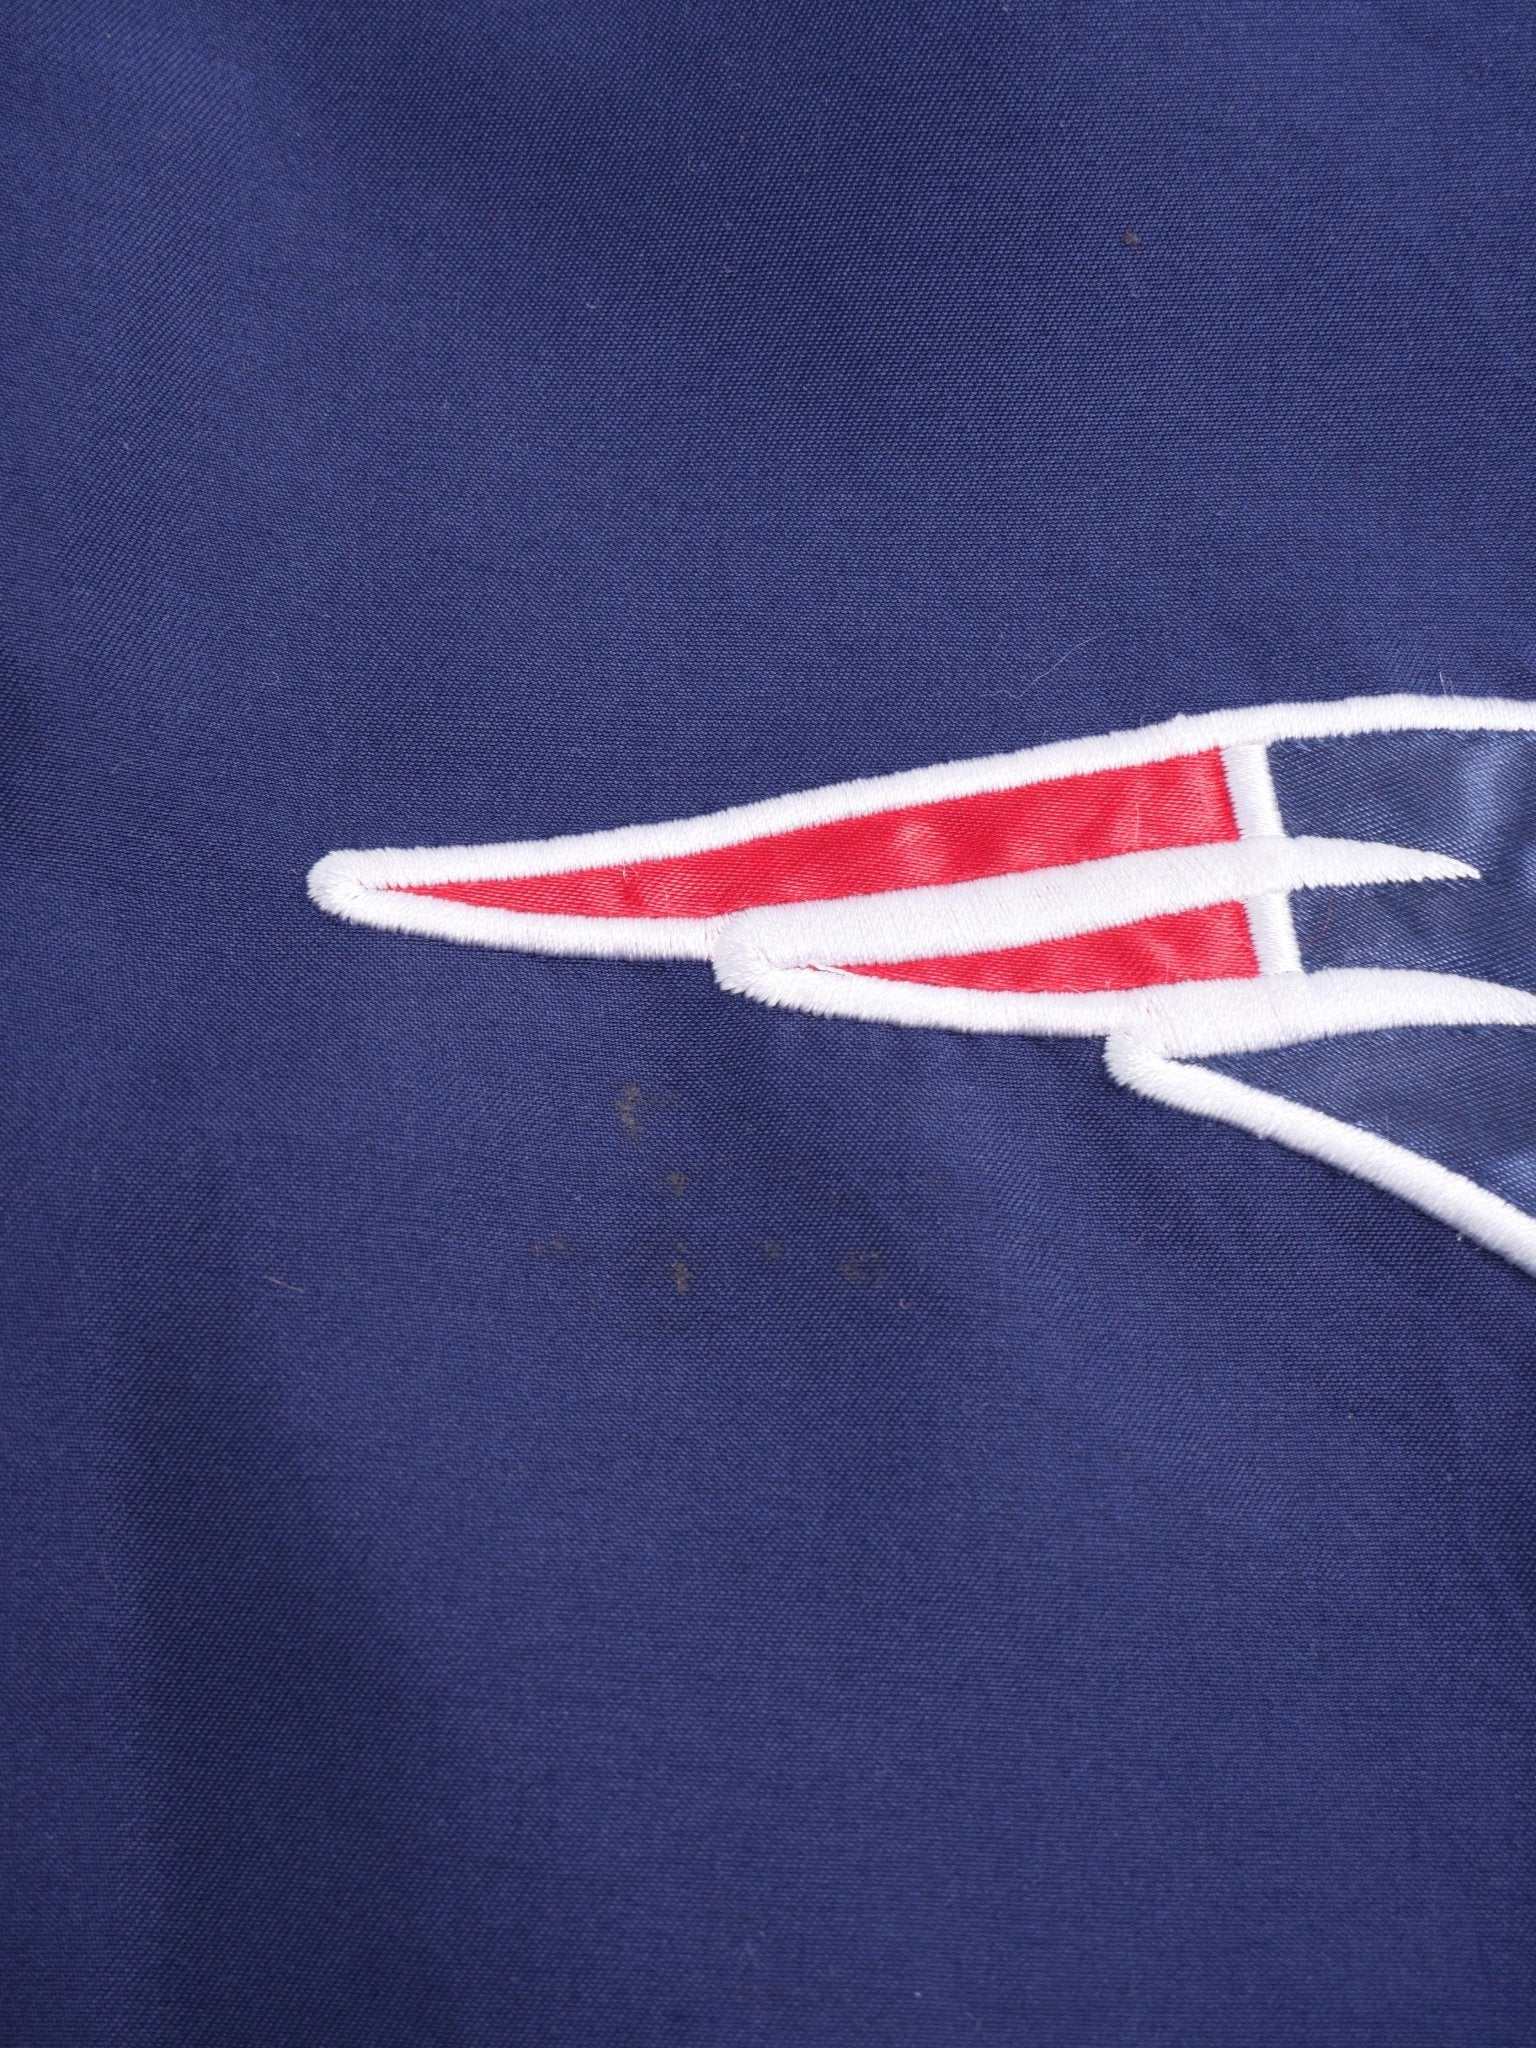 NFL New England Patriots embroidered Logo navy Track Jacke - Peeces